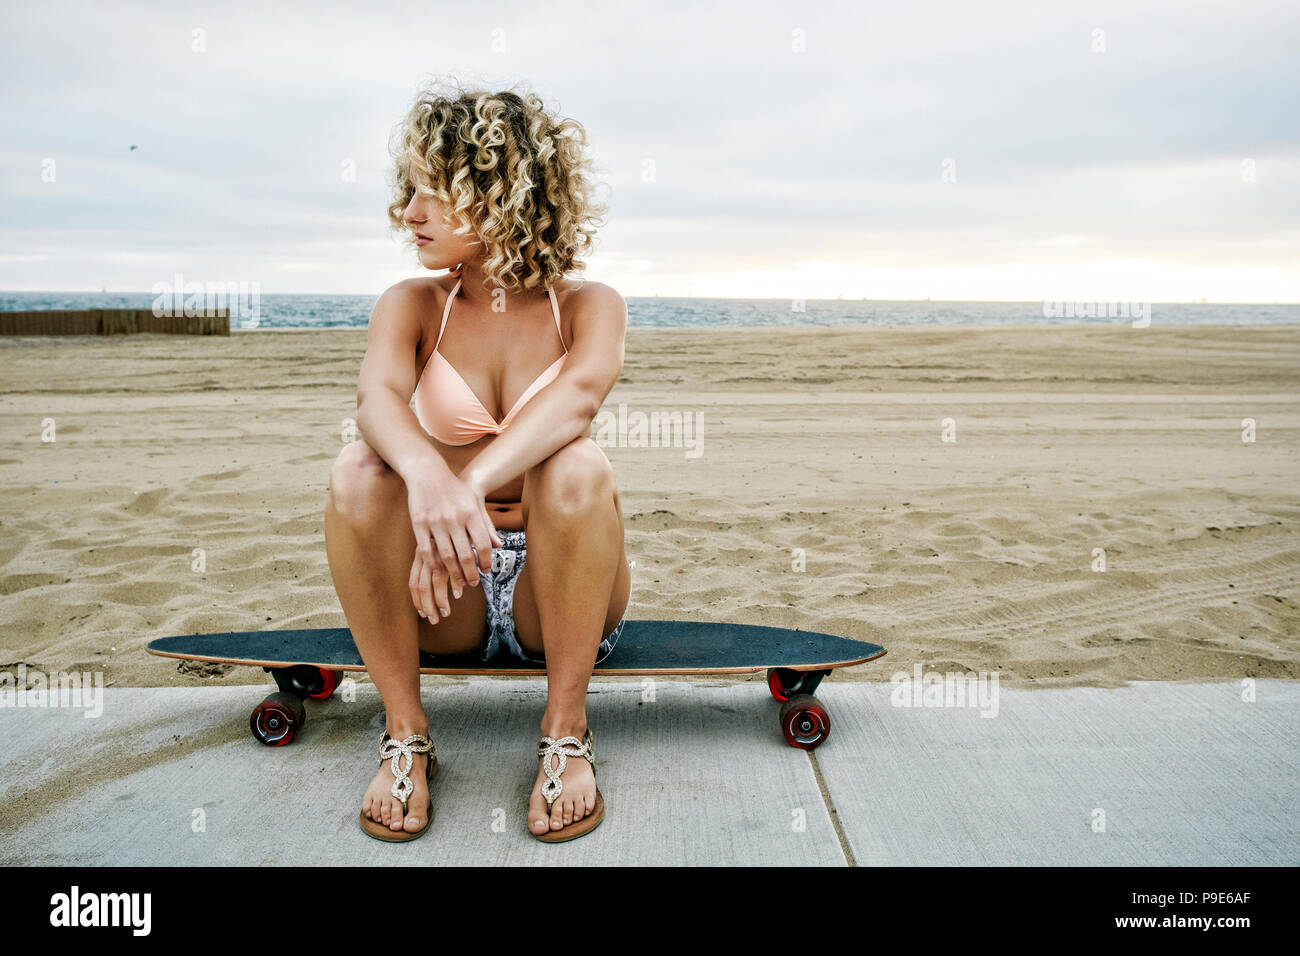 Young woman with curly blond hair wearing pink bikini sitting on skateboard  on sandy beach Stock Photo - Alamy